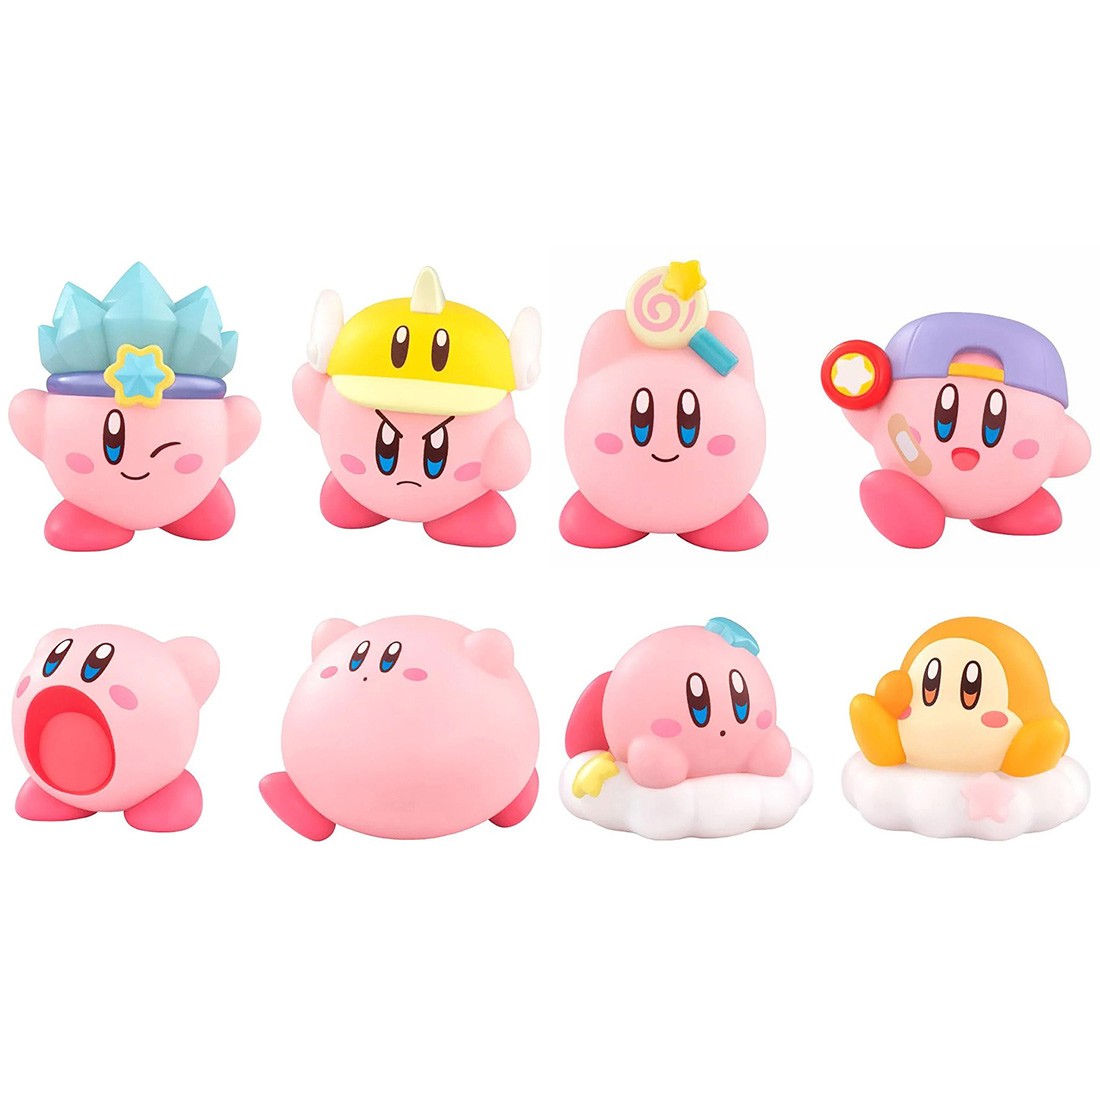 Bandai Shokugan Kirby's Dream Land Kirby Friends Vol 2 Set of 12 Figures  pink